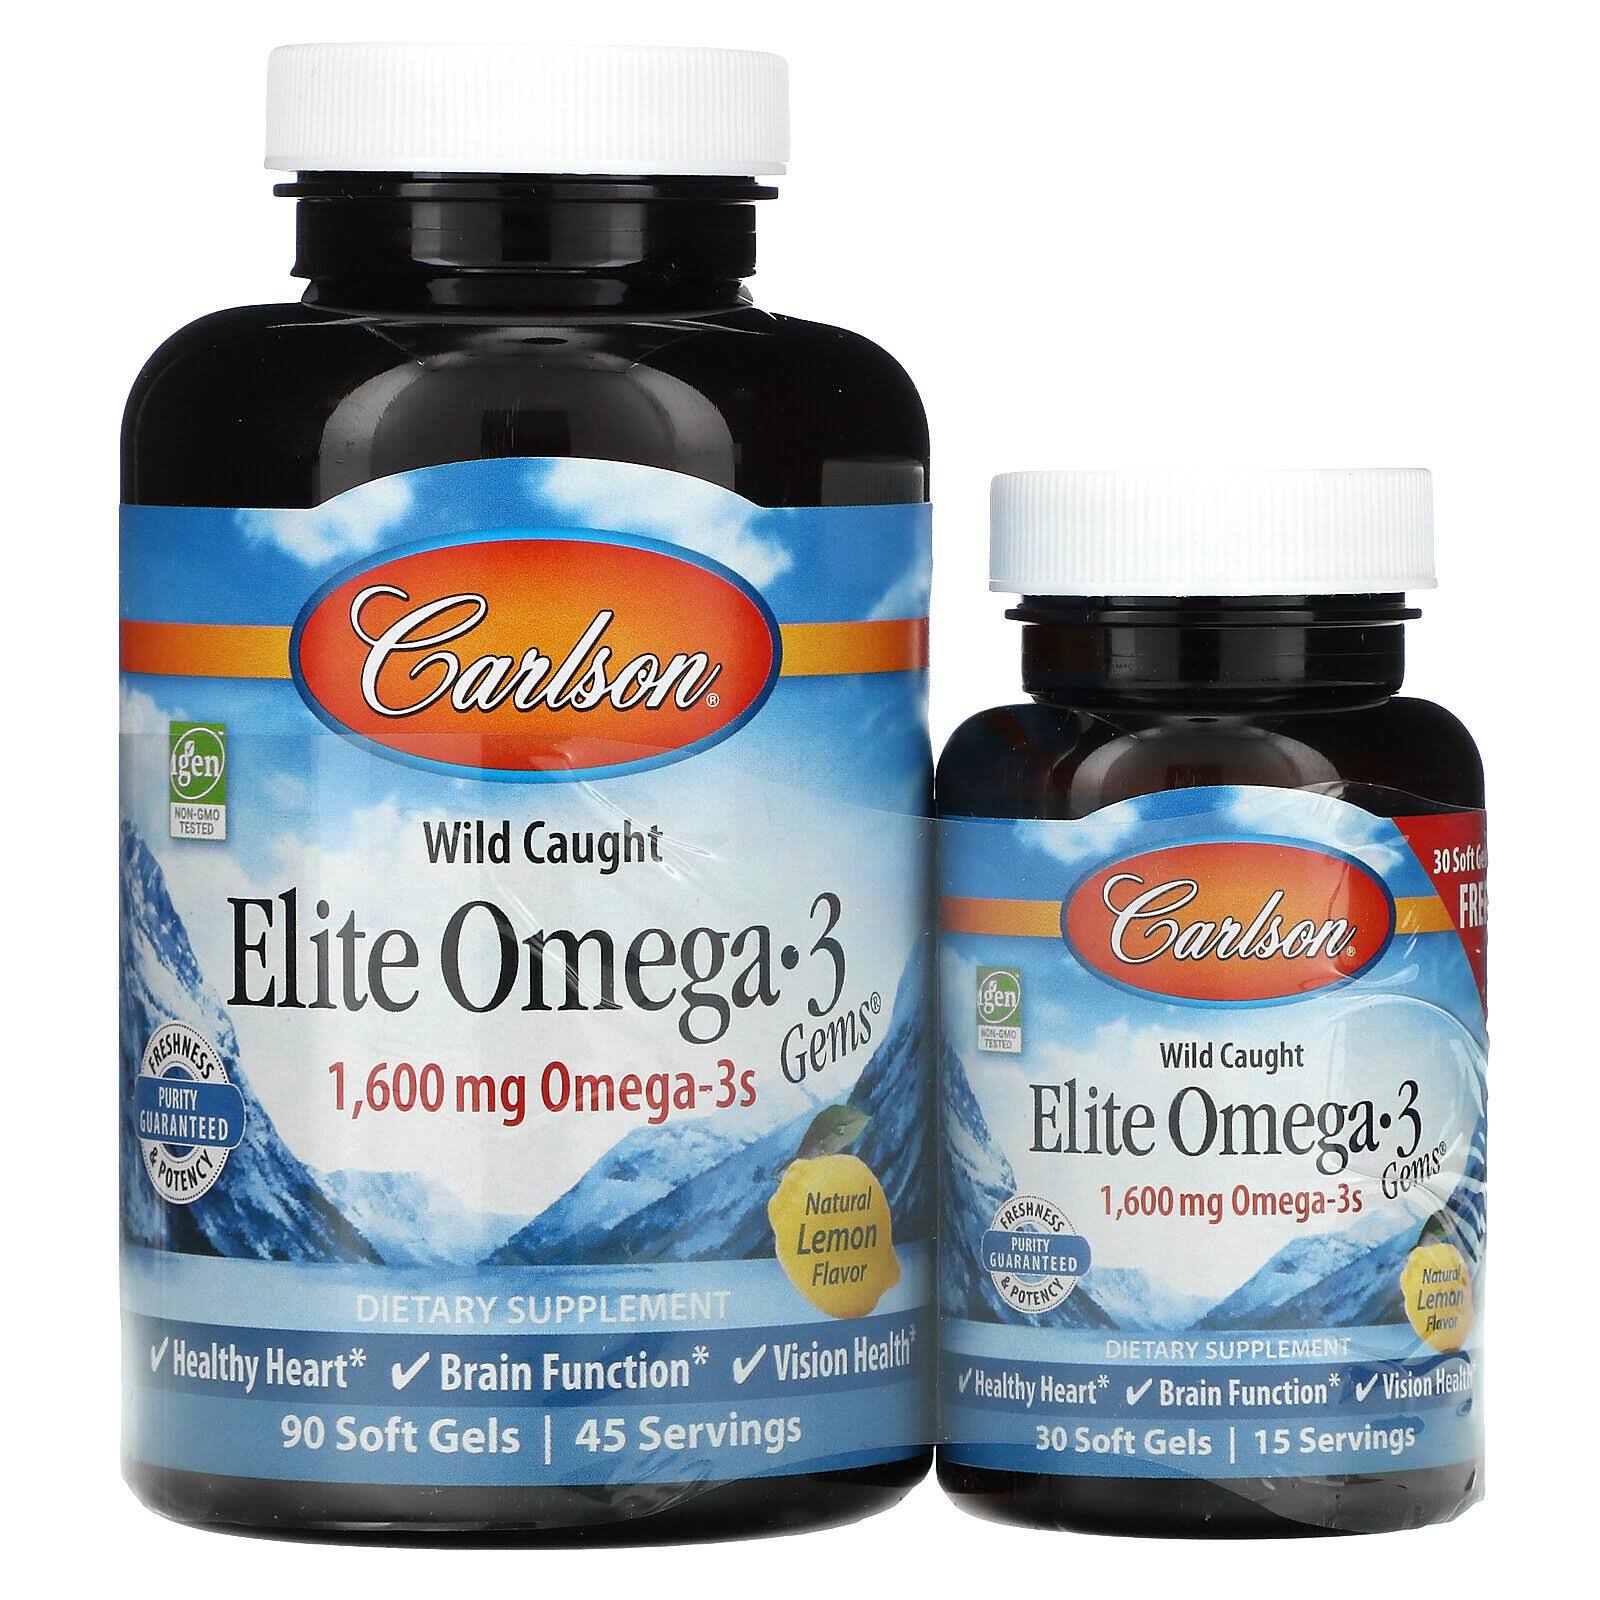 Carlson Elite Omega-3 Gems Fish Oil